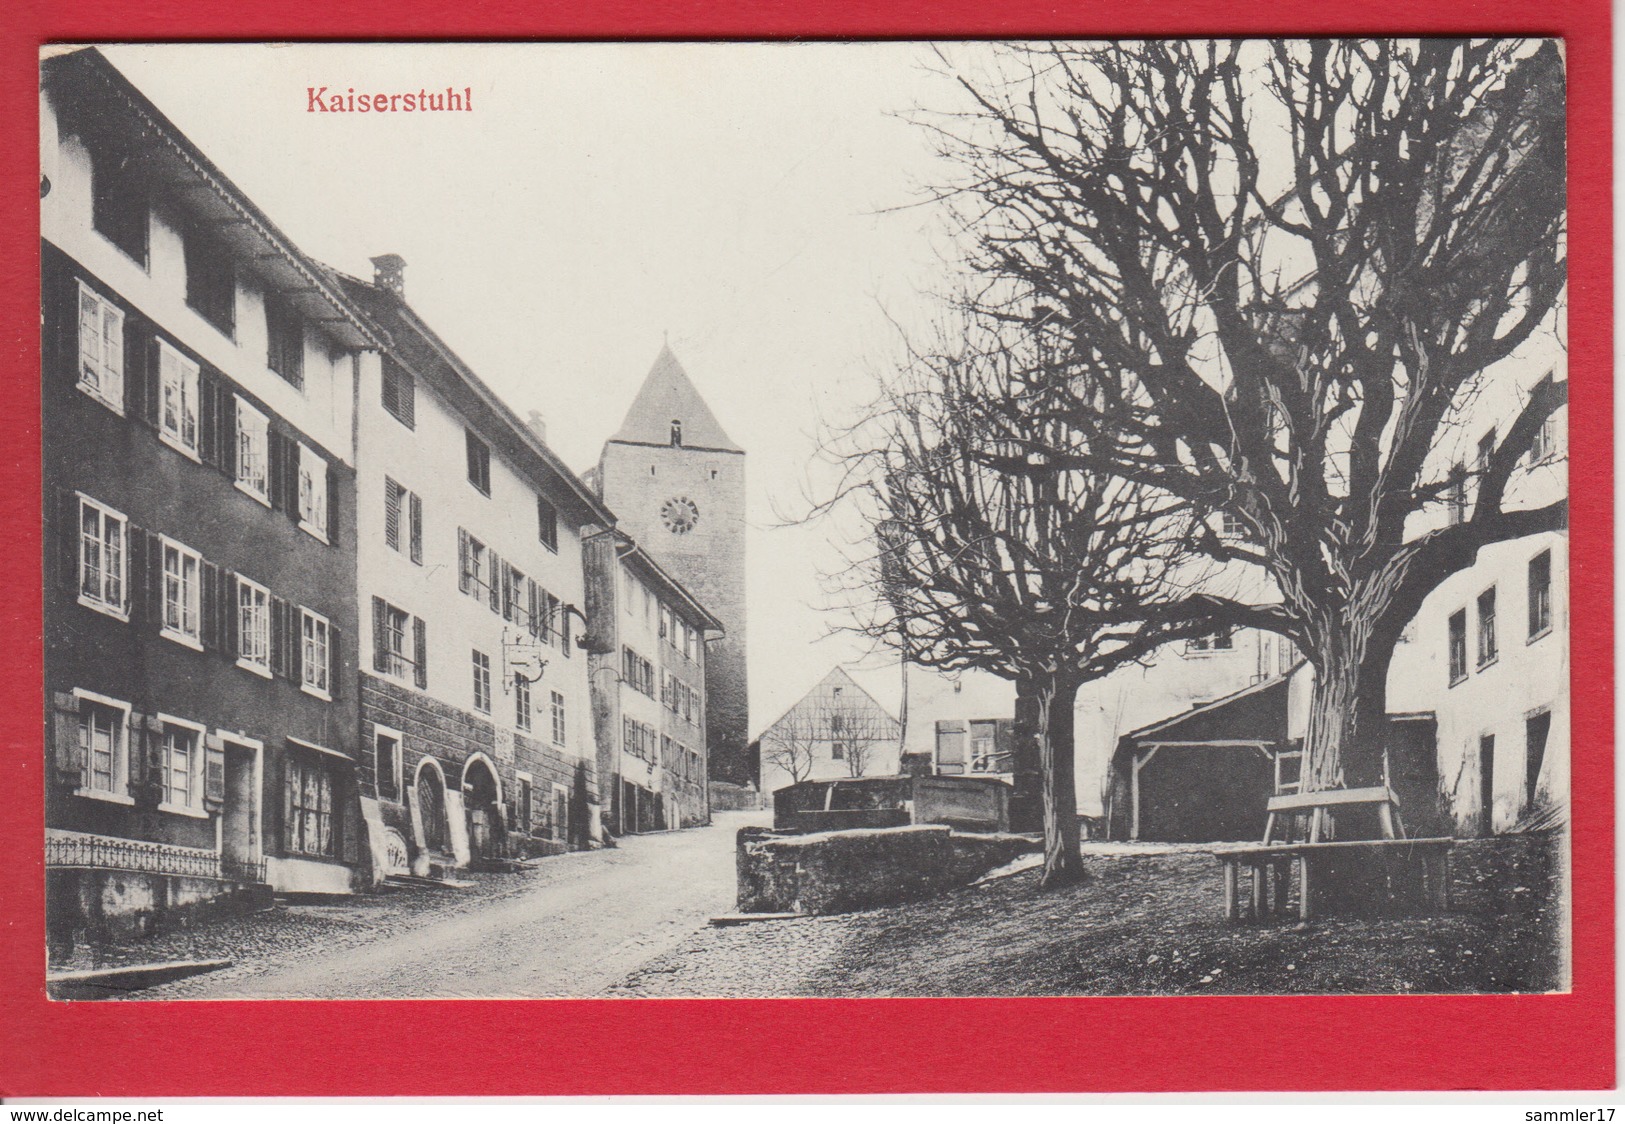 KAISERSTUHL I - Kaiserstuhl